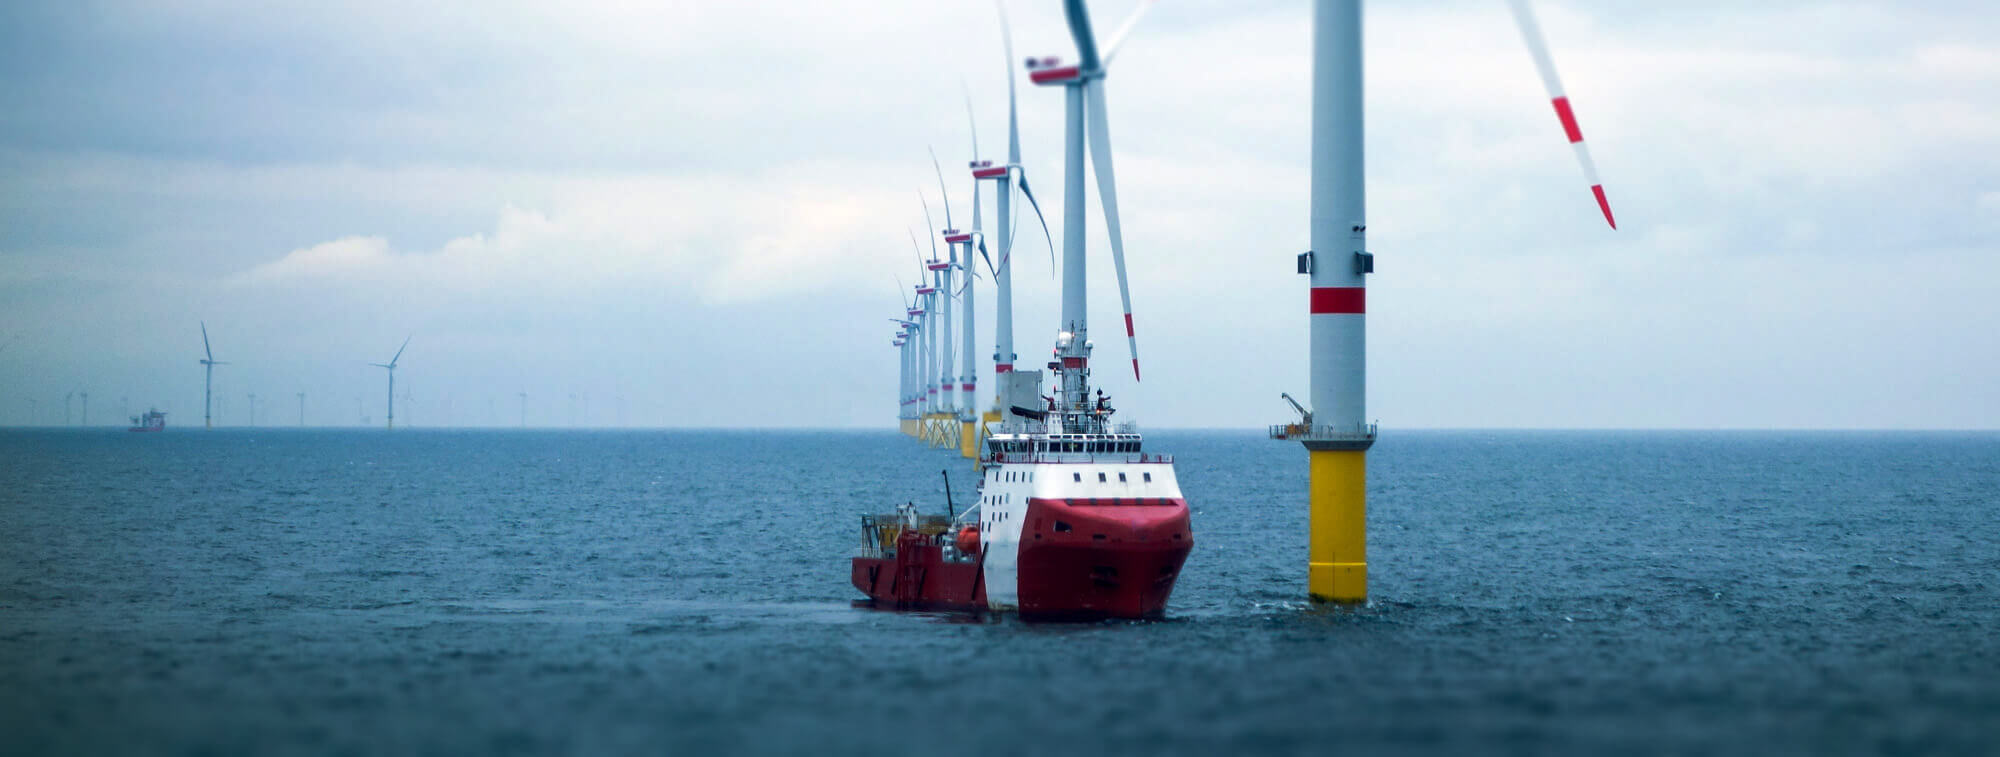 renewable energy offshore edit - Why us